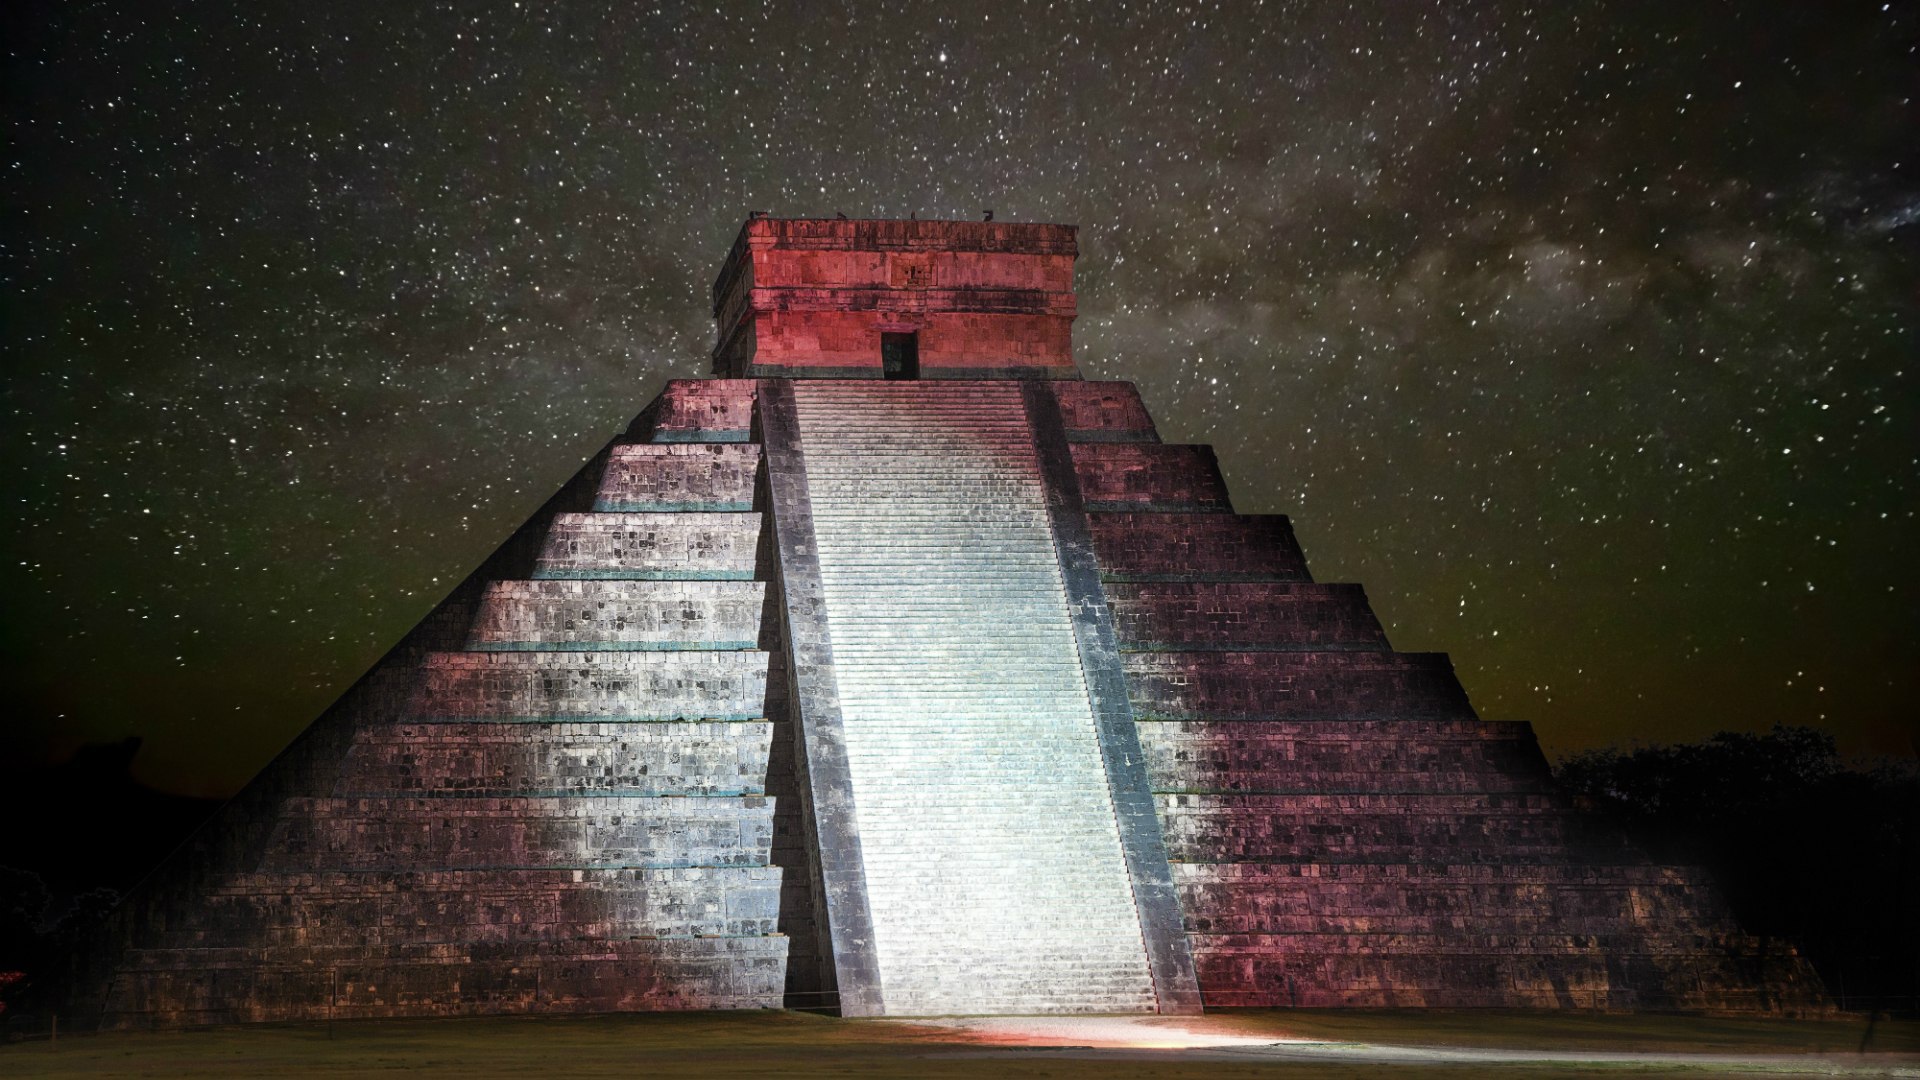 Mayan pyramid in Mexico